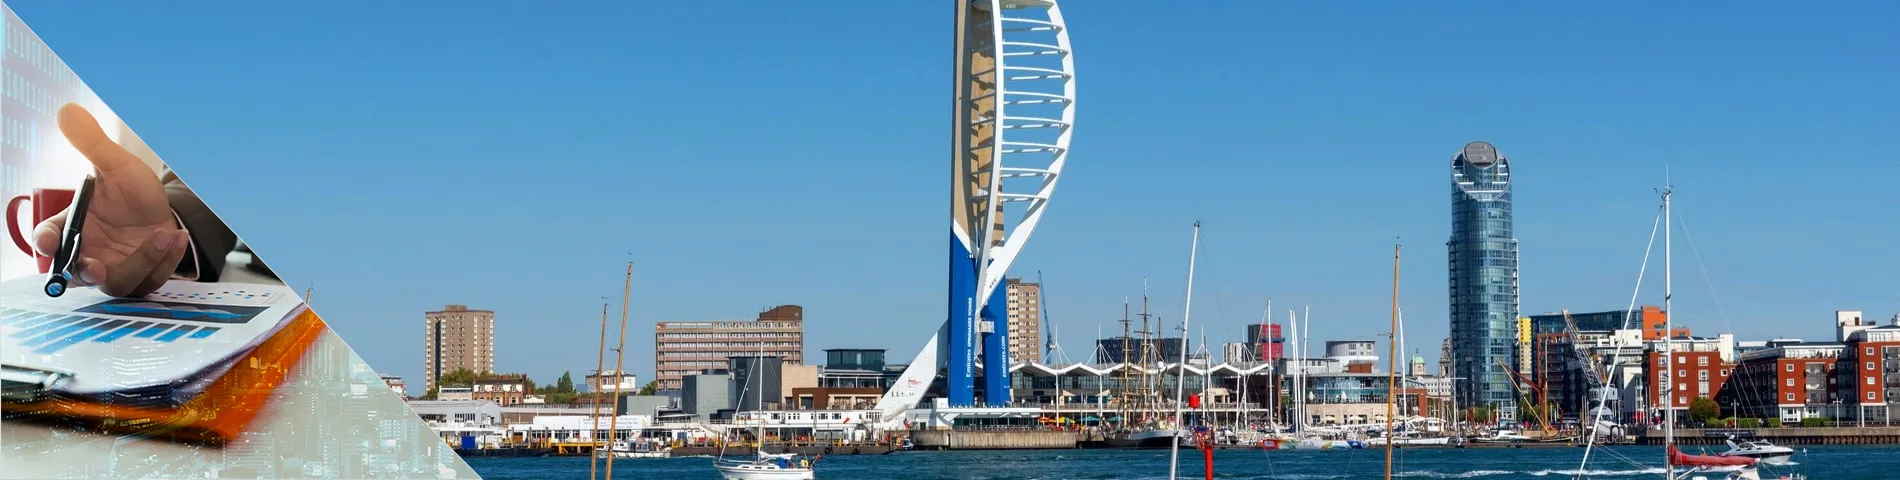 Portsmouth - Banca i Finances